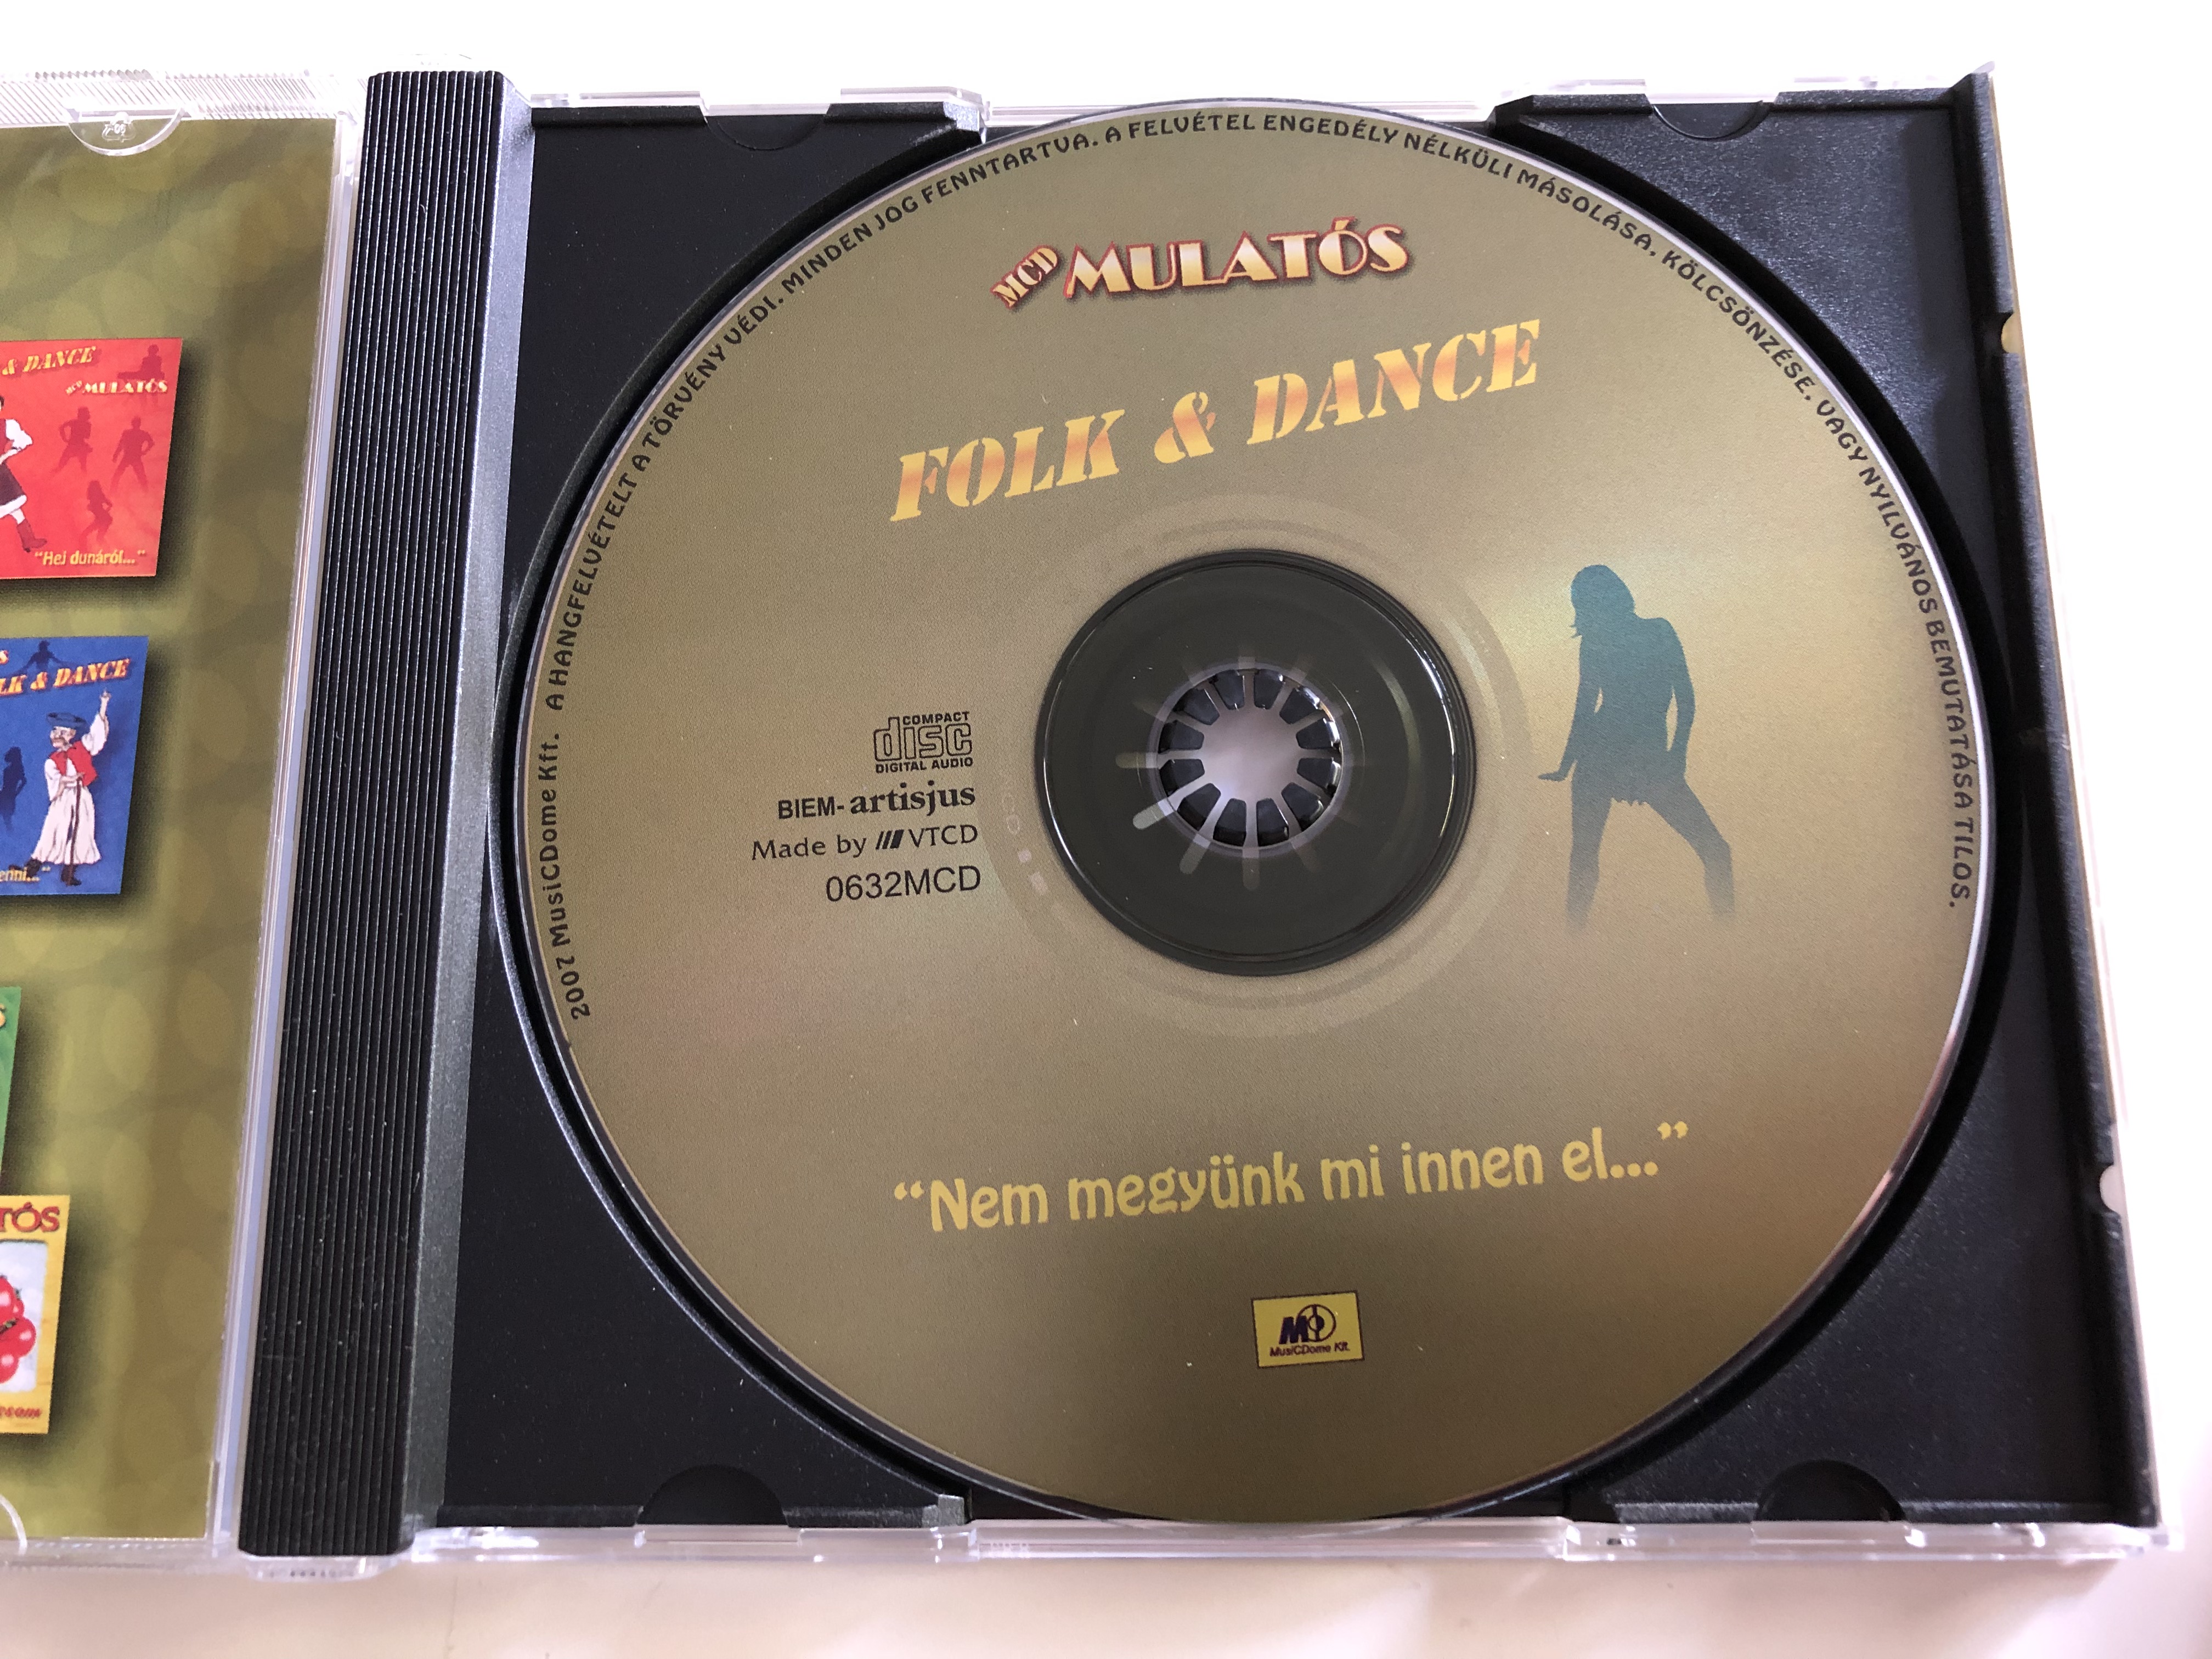 folk-dance-mcd-mulat-s-nem-megy-nk-mi-innen-el..-audio-cd-2007-0632-mcd-3-.jpg